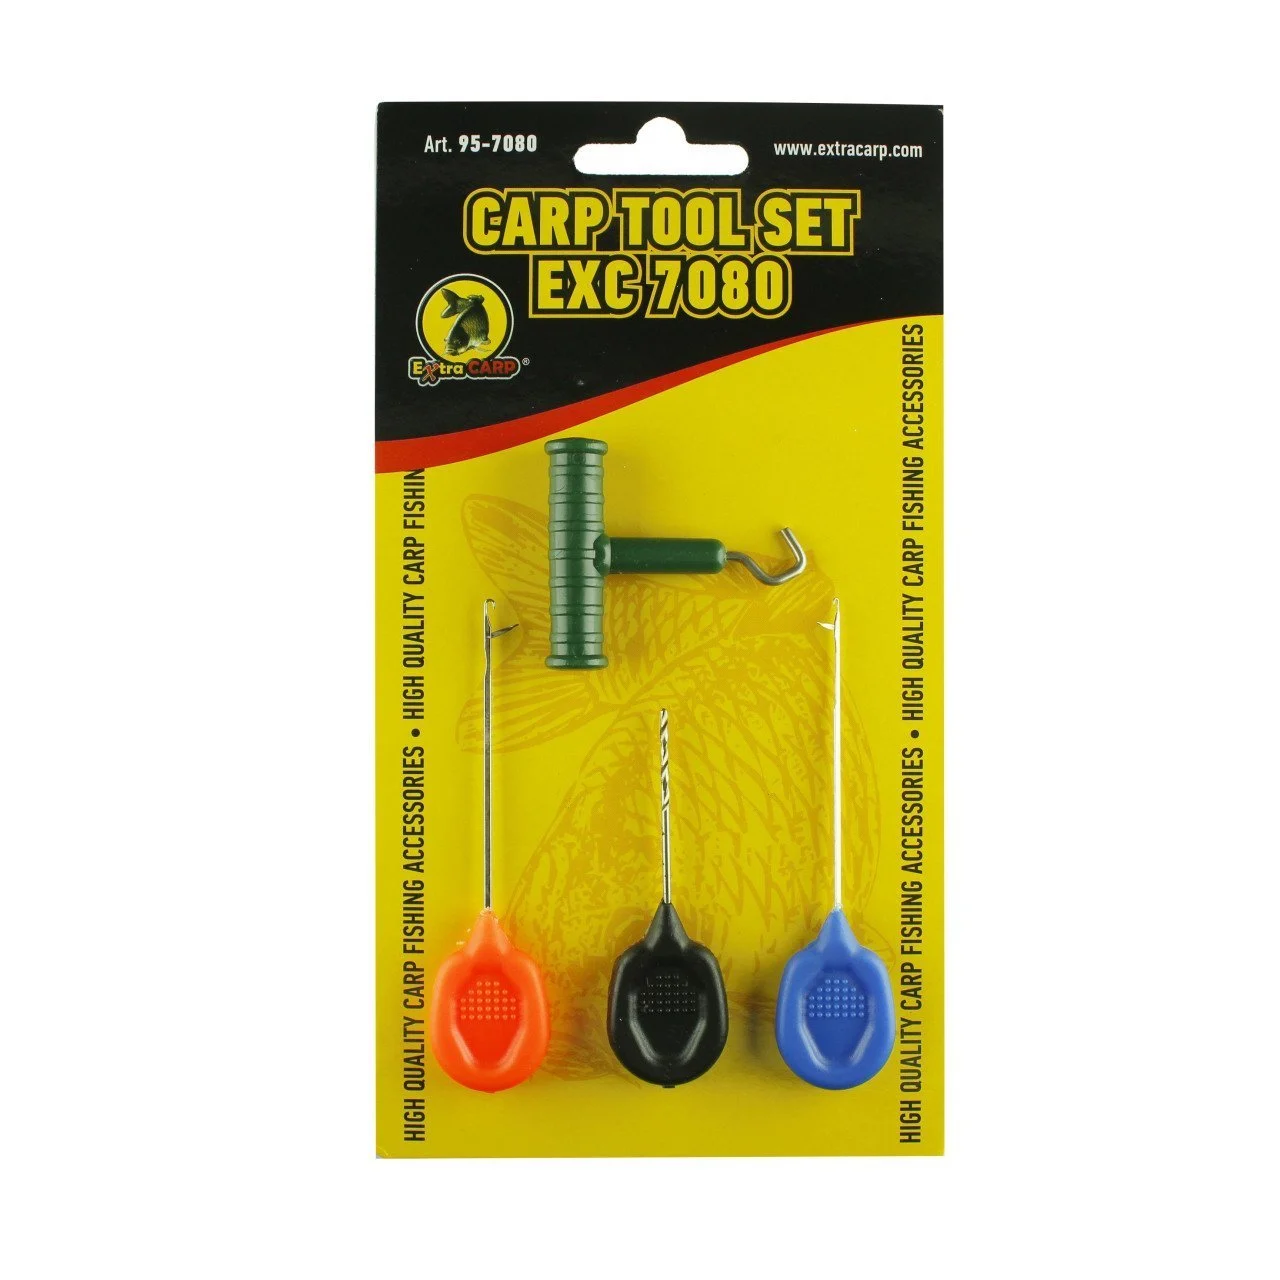 Extra Carp Carp Tool Set Exc-7080